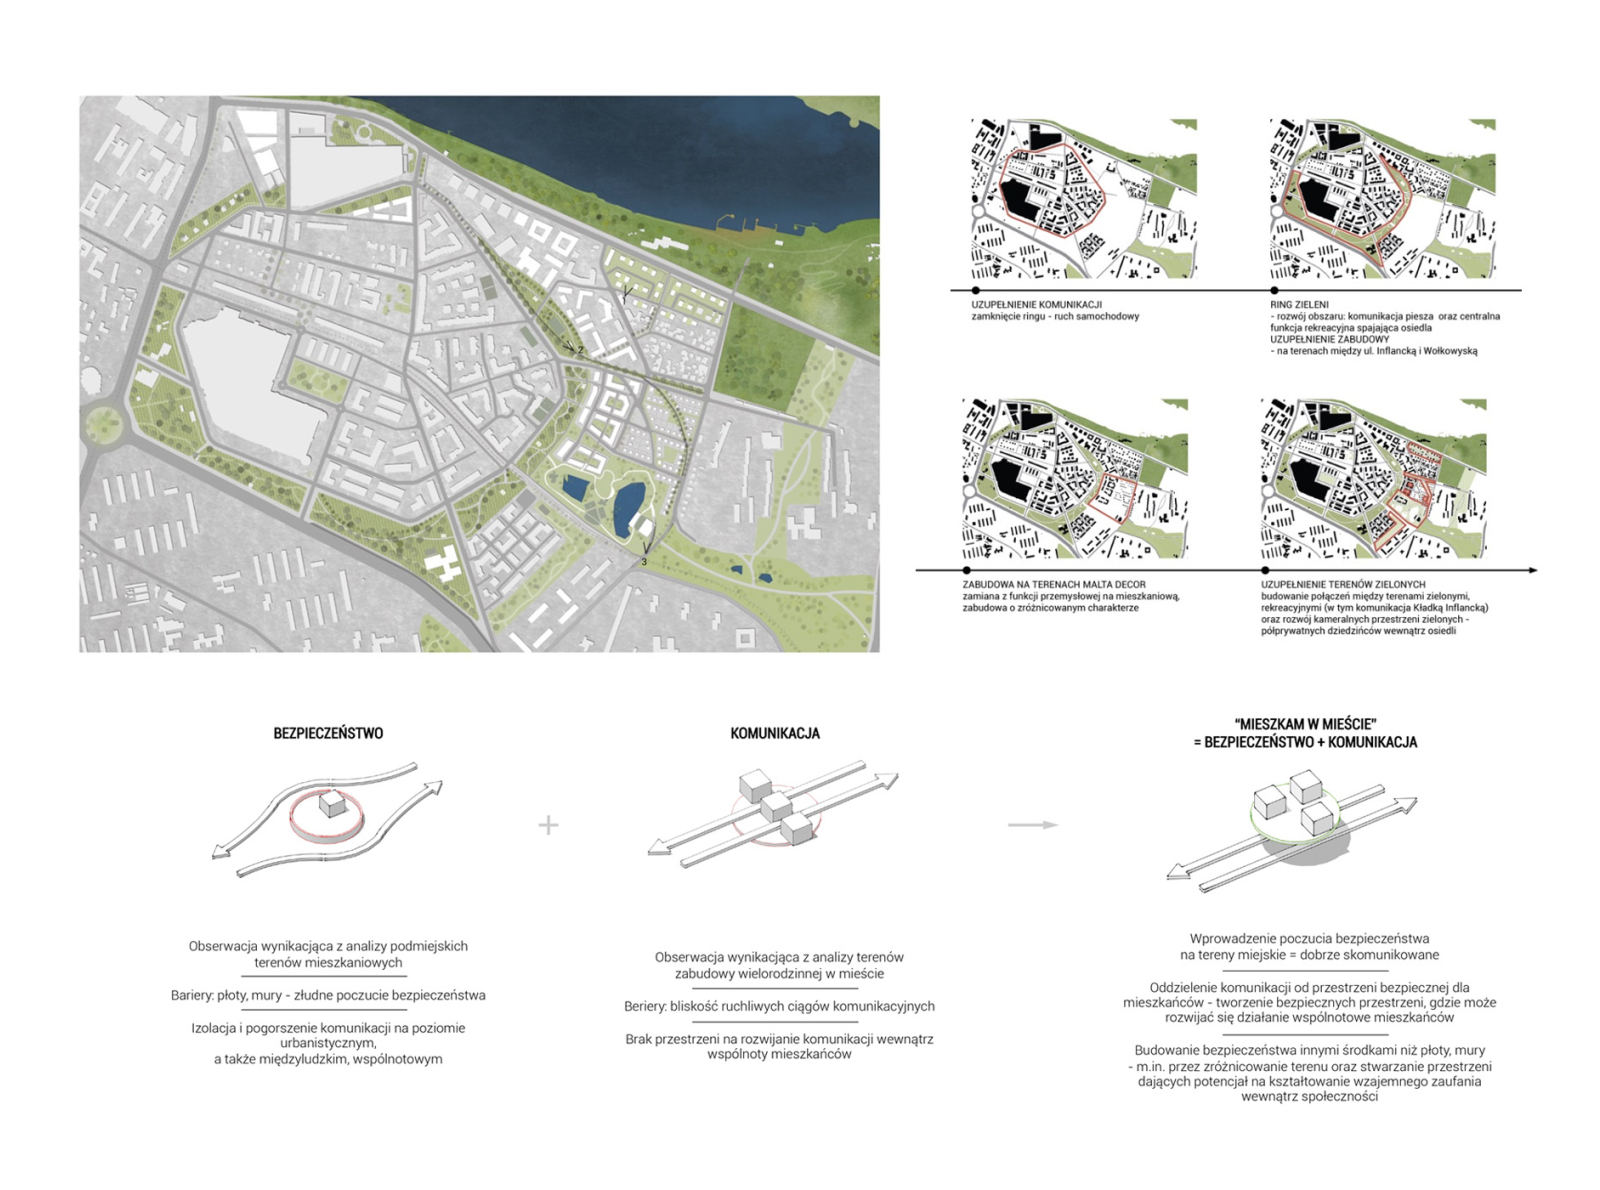 case study in urban design